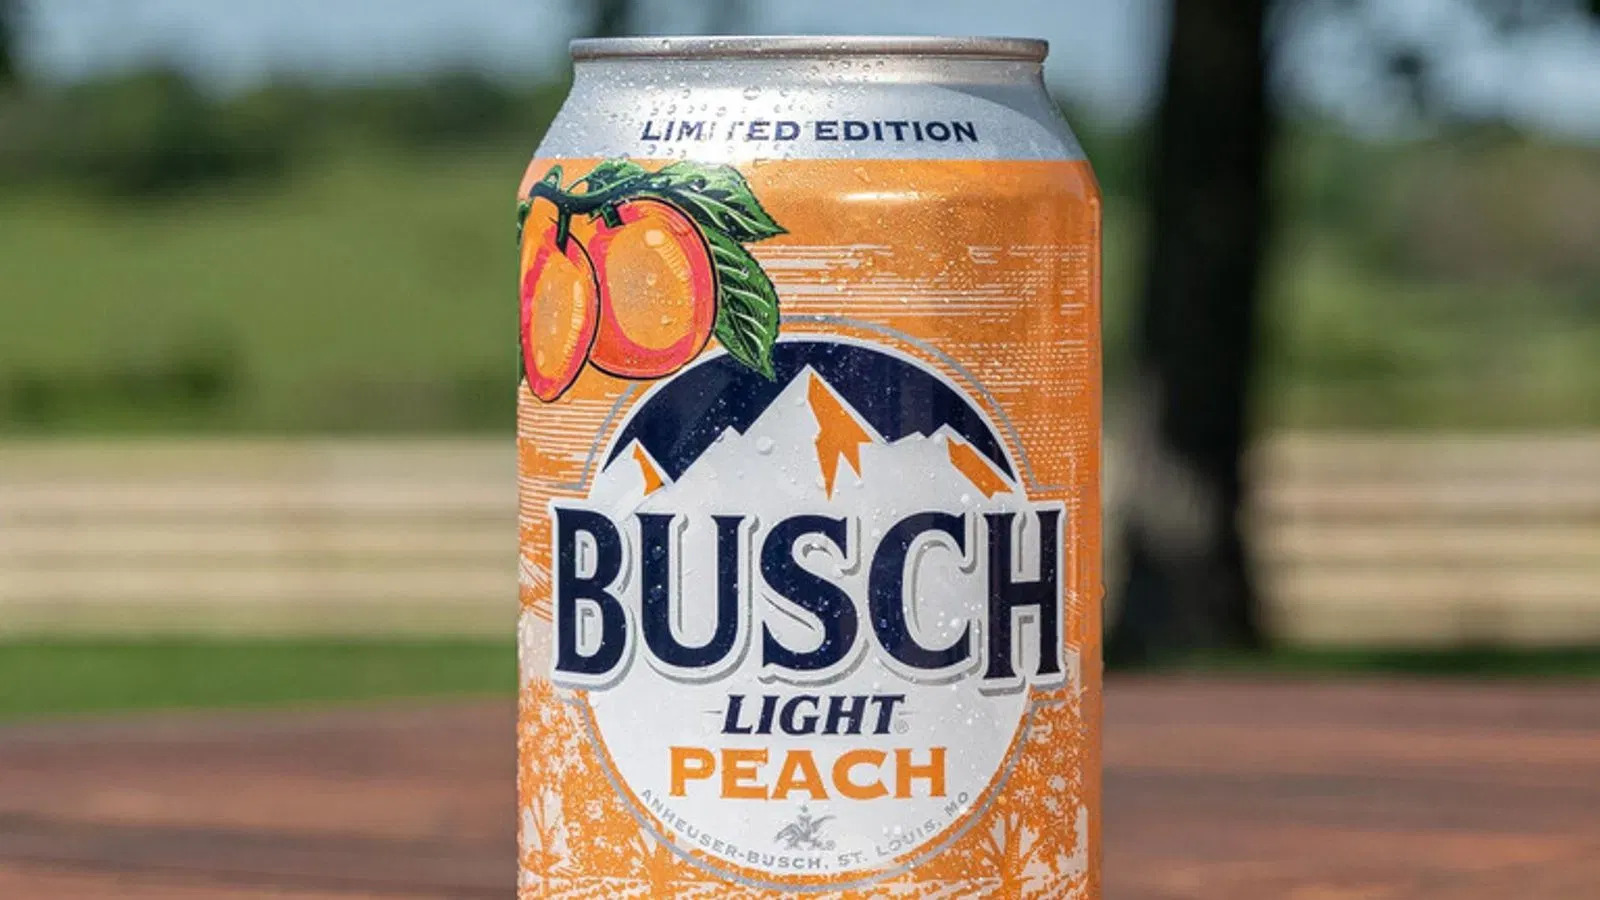 20-refreshing-facts-about-peach-busch-light